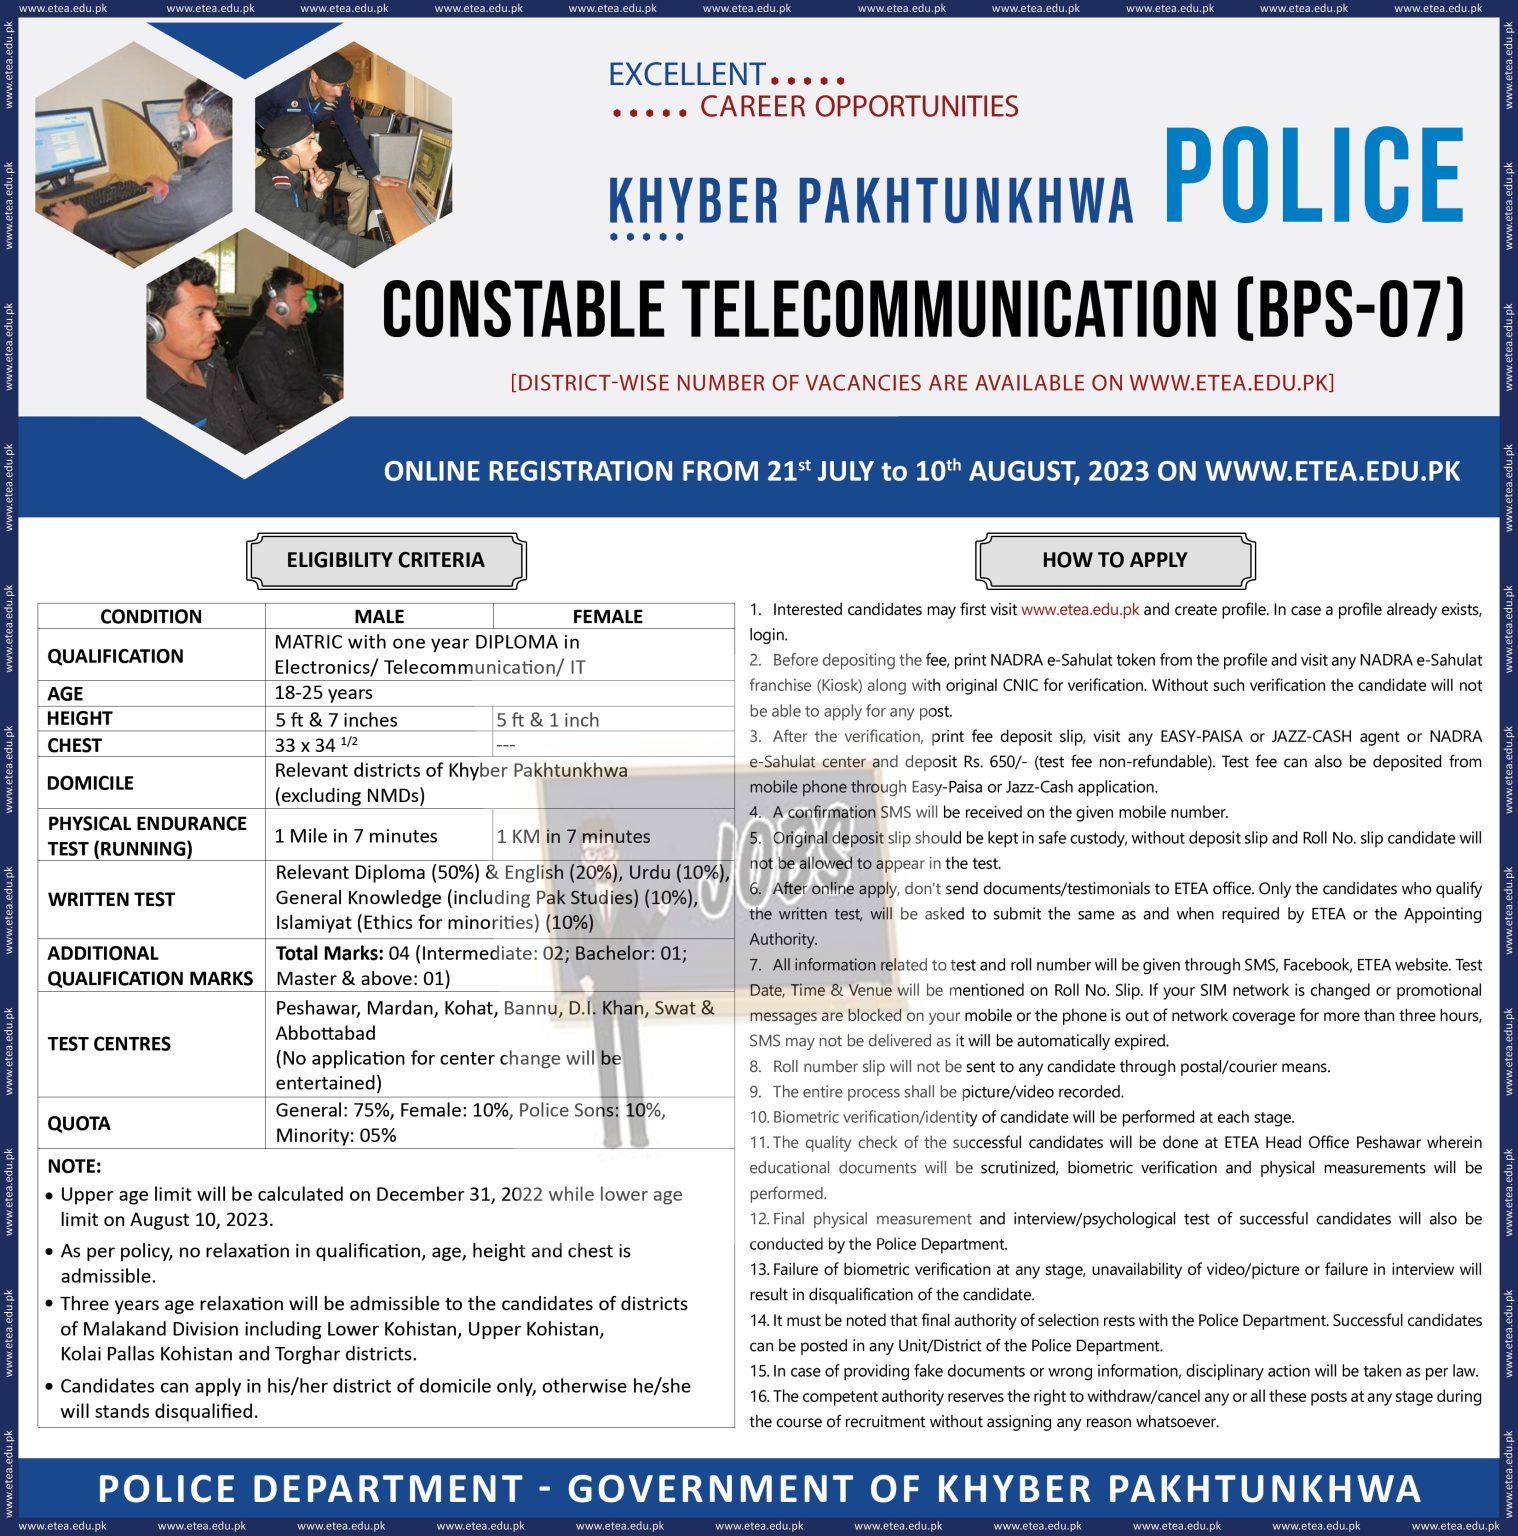 KPK Police Constable Telecommunication Jobs 2023